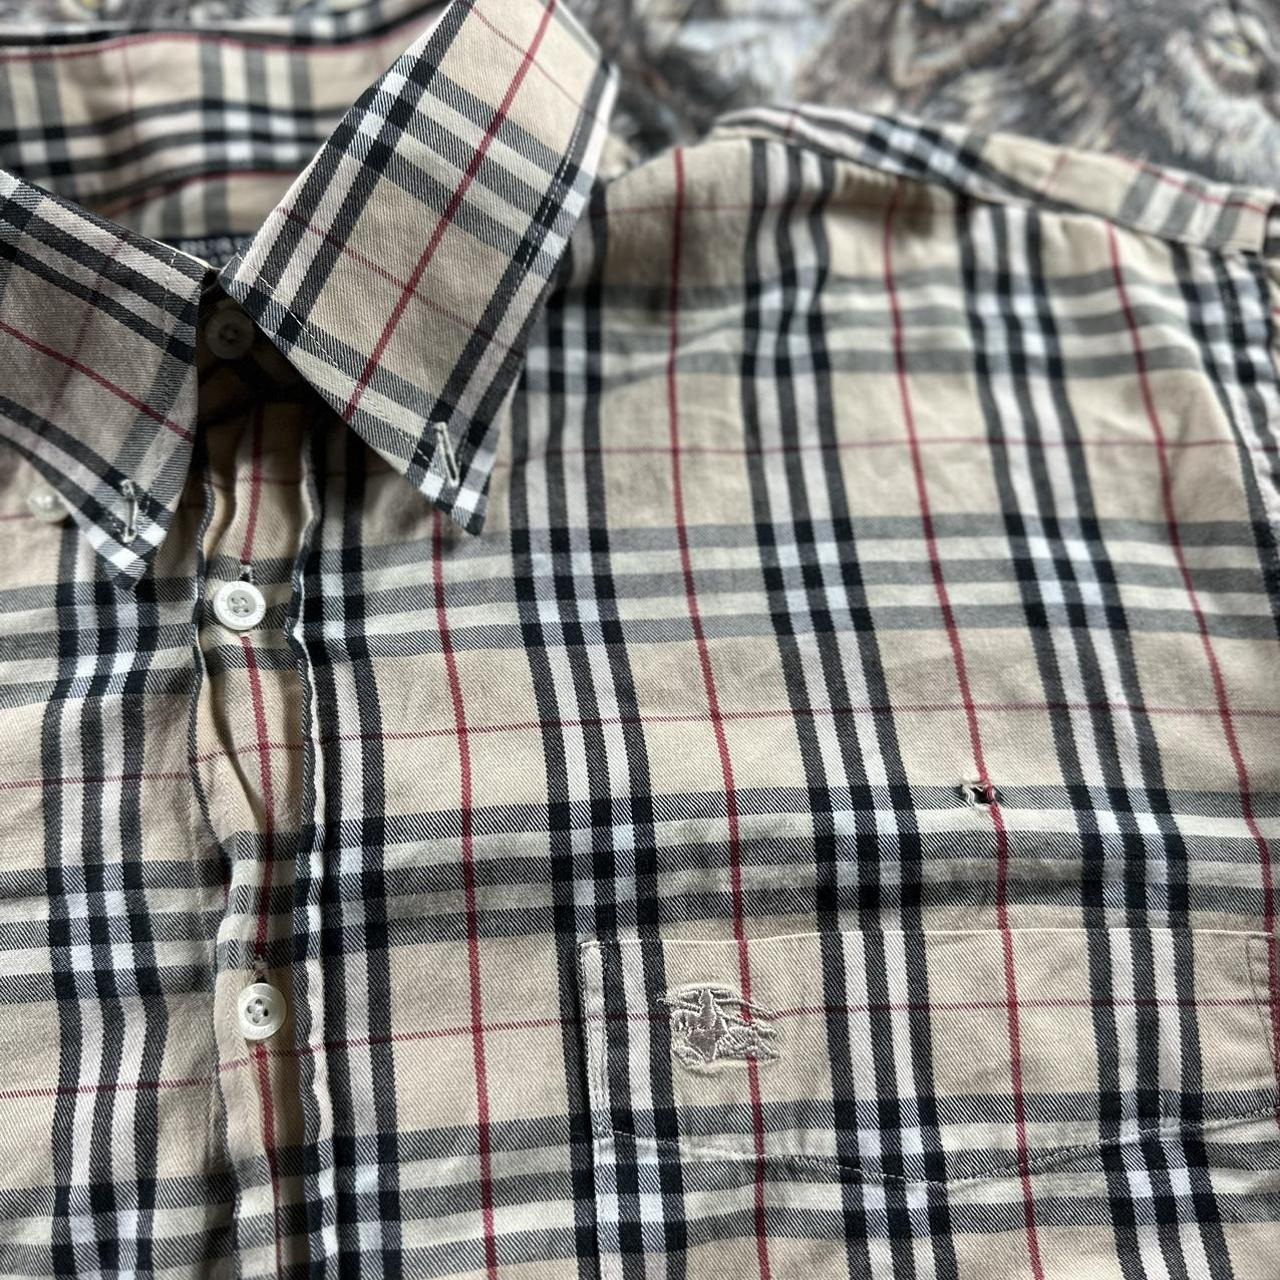 Vintage Burberry nova check shirt